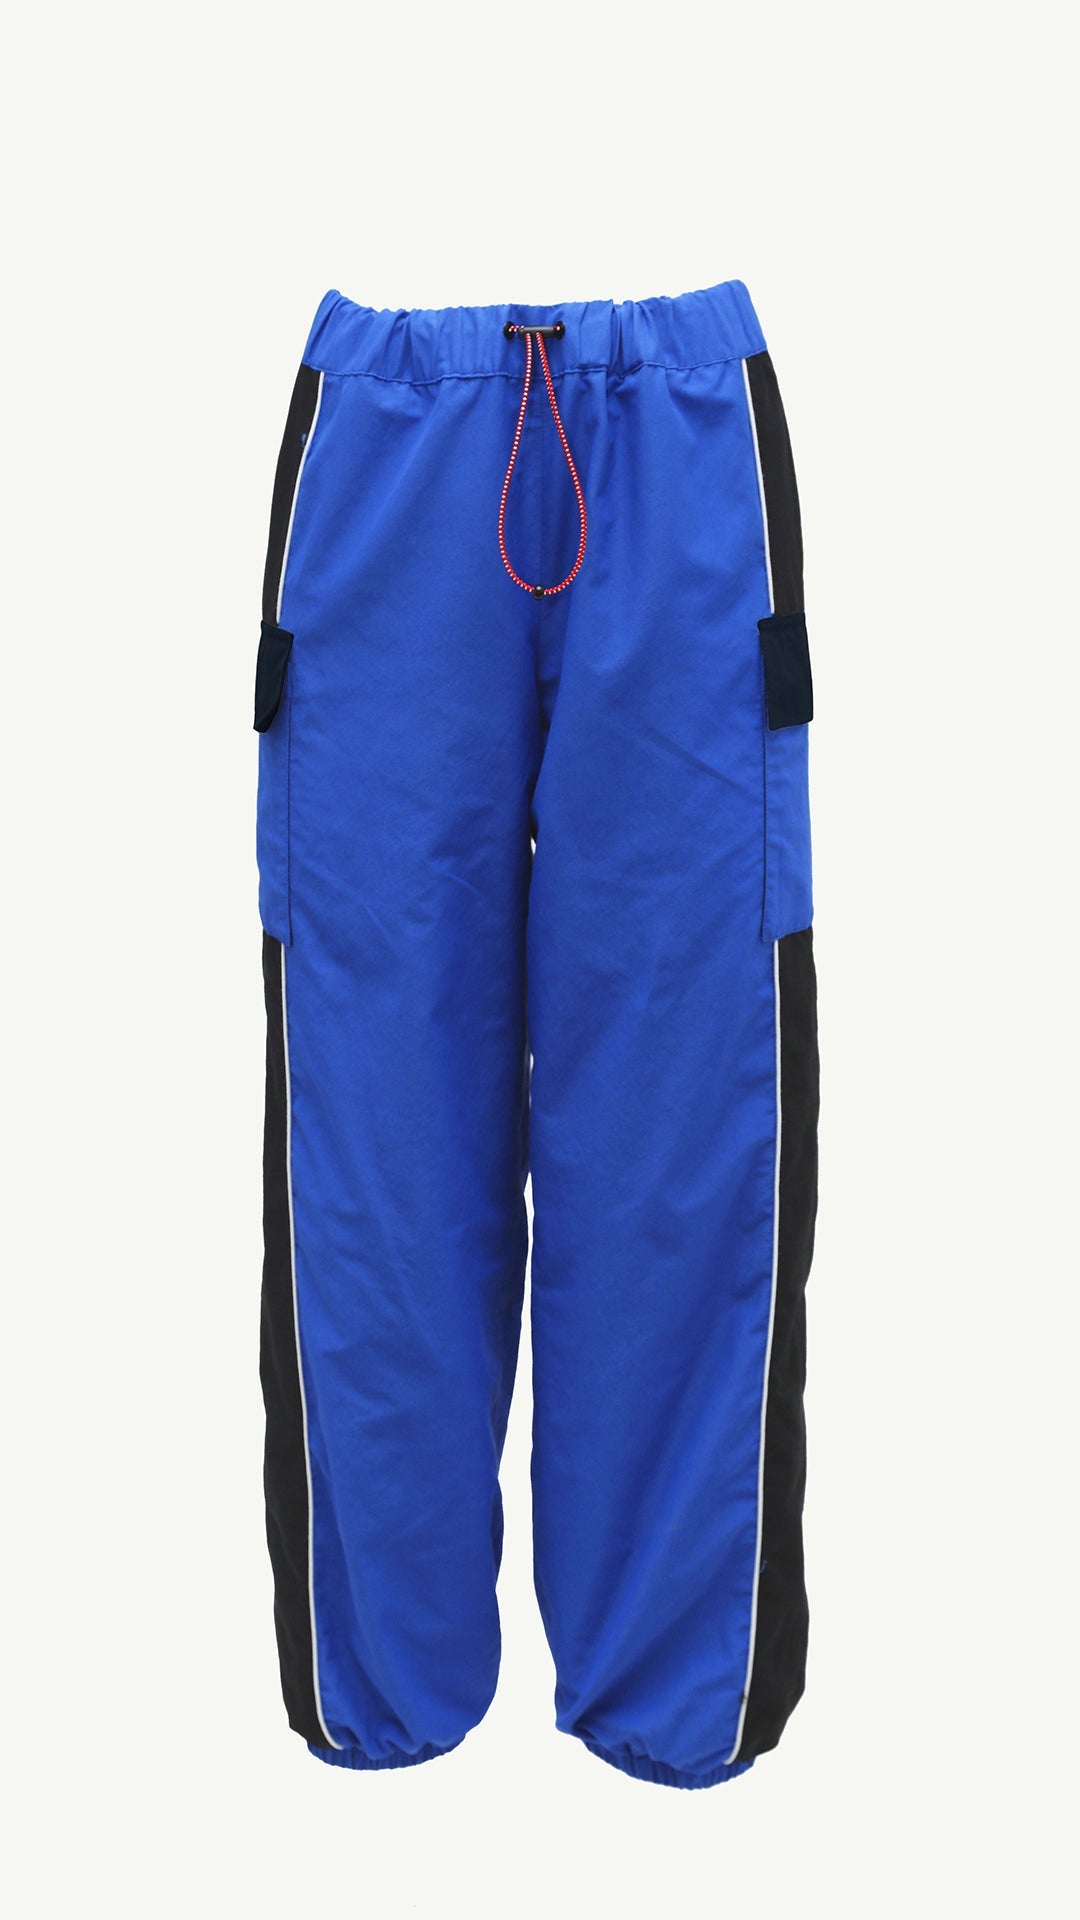 Essex Pants (Sample Product)